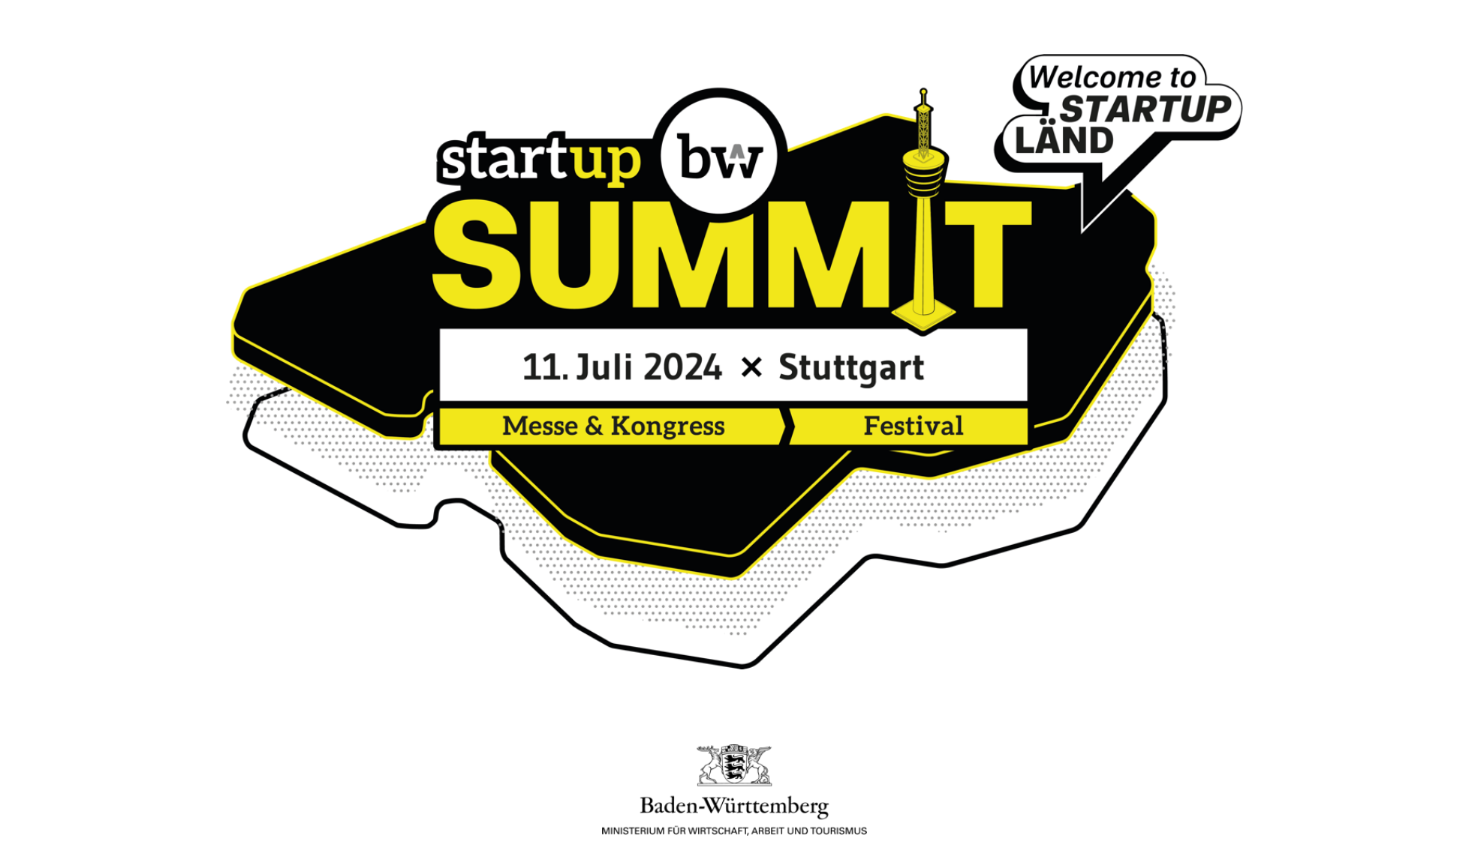 Startup BW Summit 2024